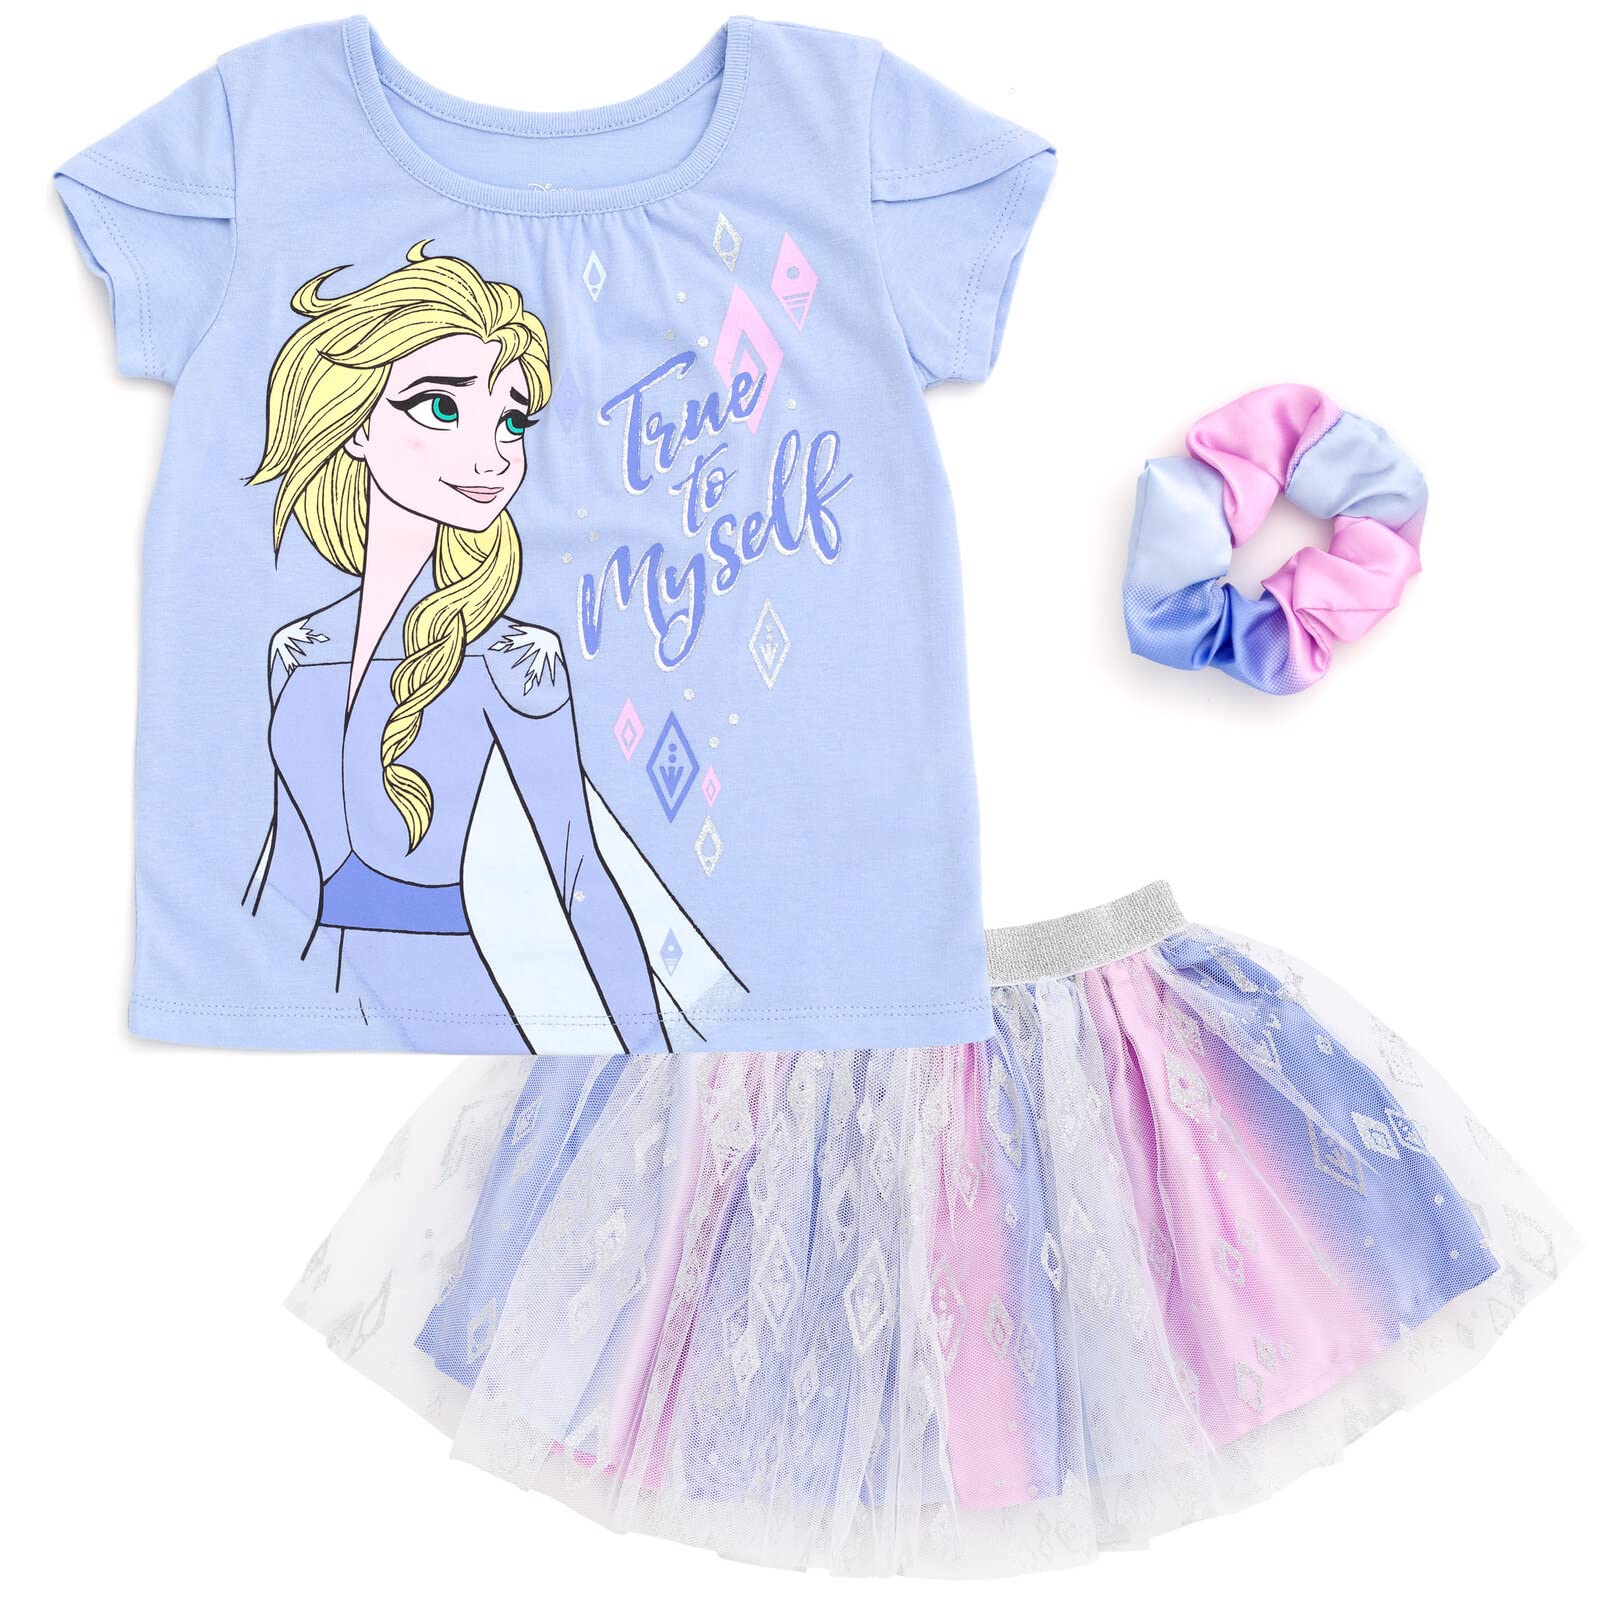 Disney Princess Moana Frozen Girls T-Shirt Tulle Mesh Skirt and Scrunchie 3 Piece Outfit Set Toddler to Big Kid